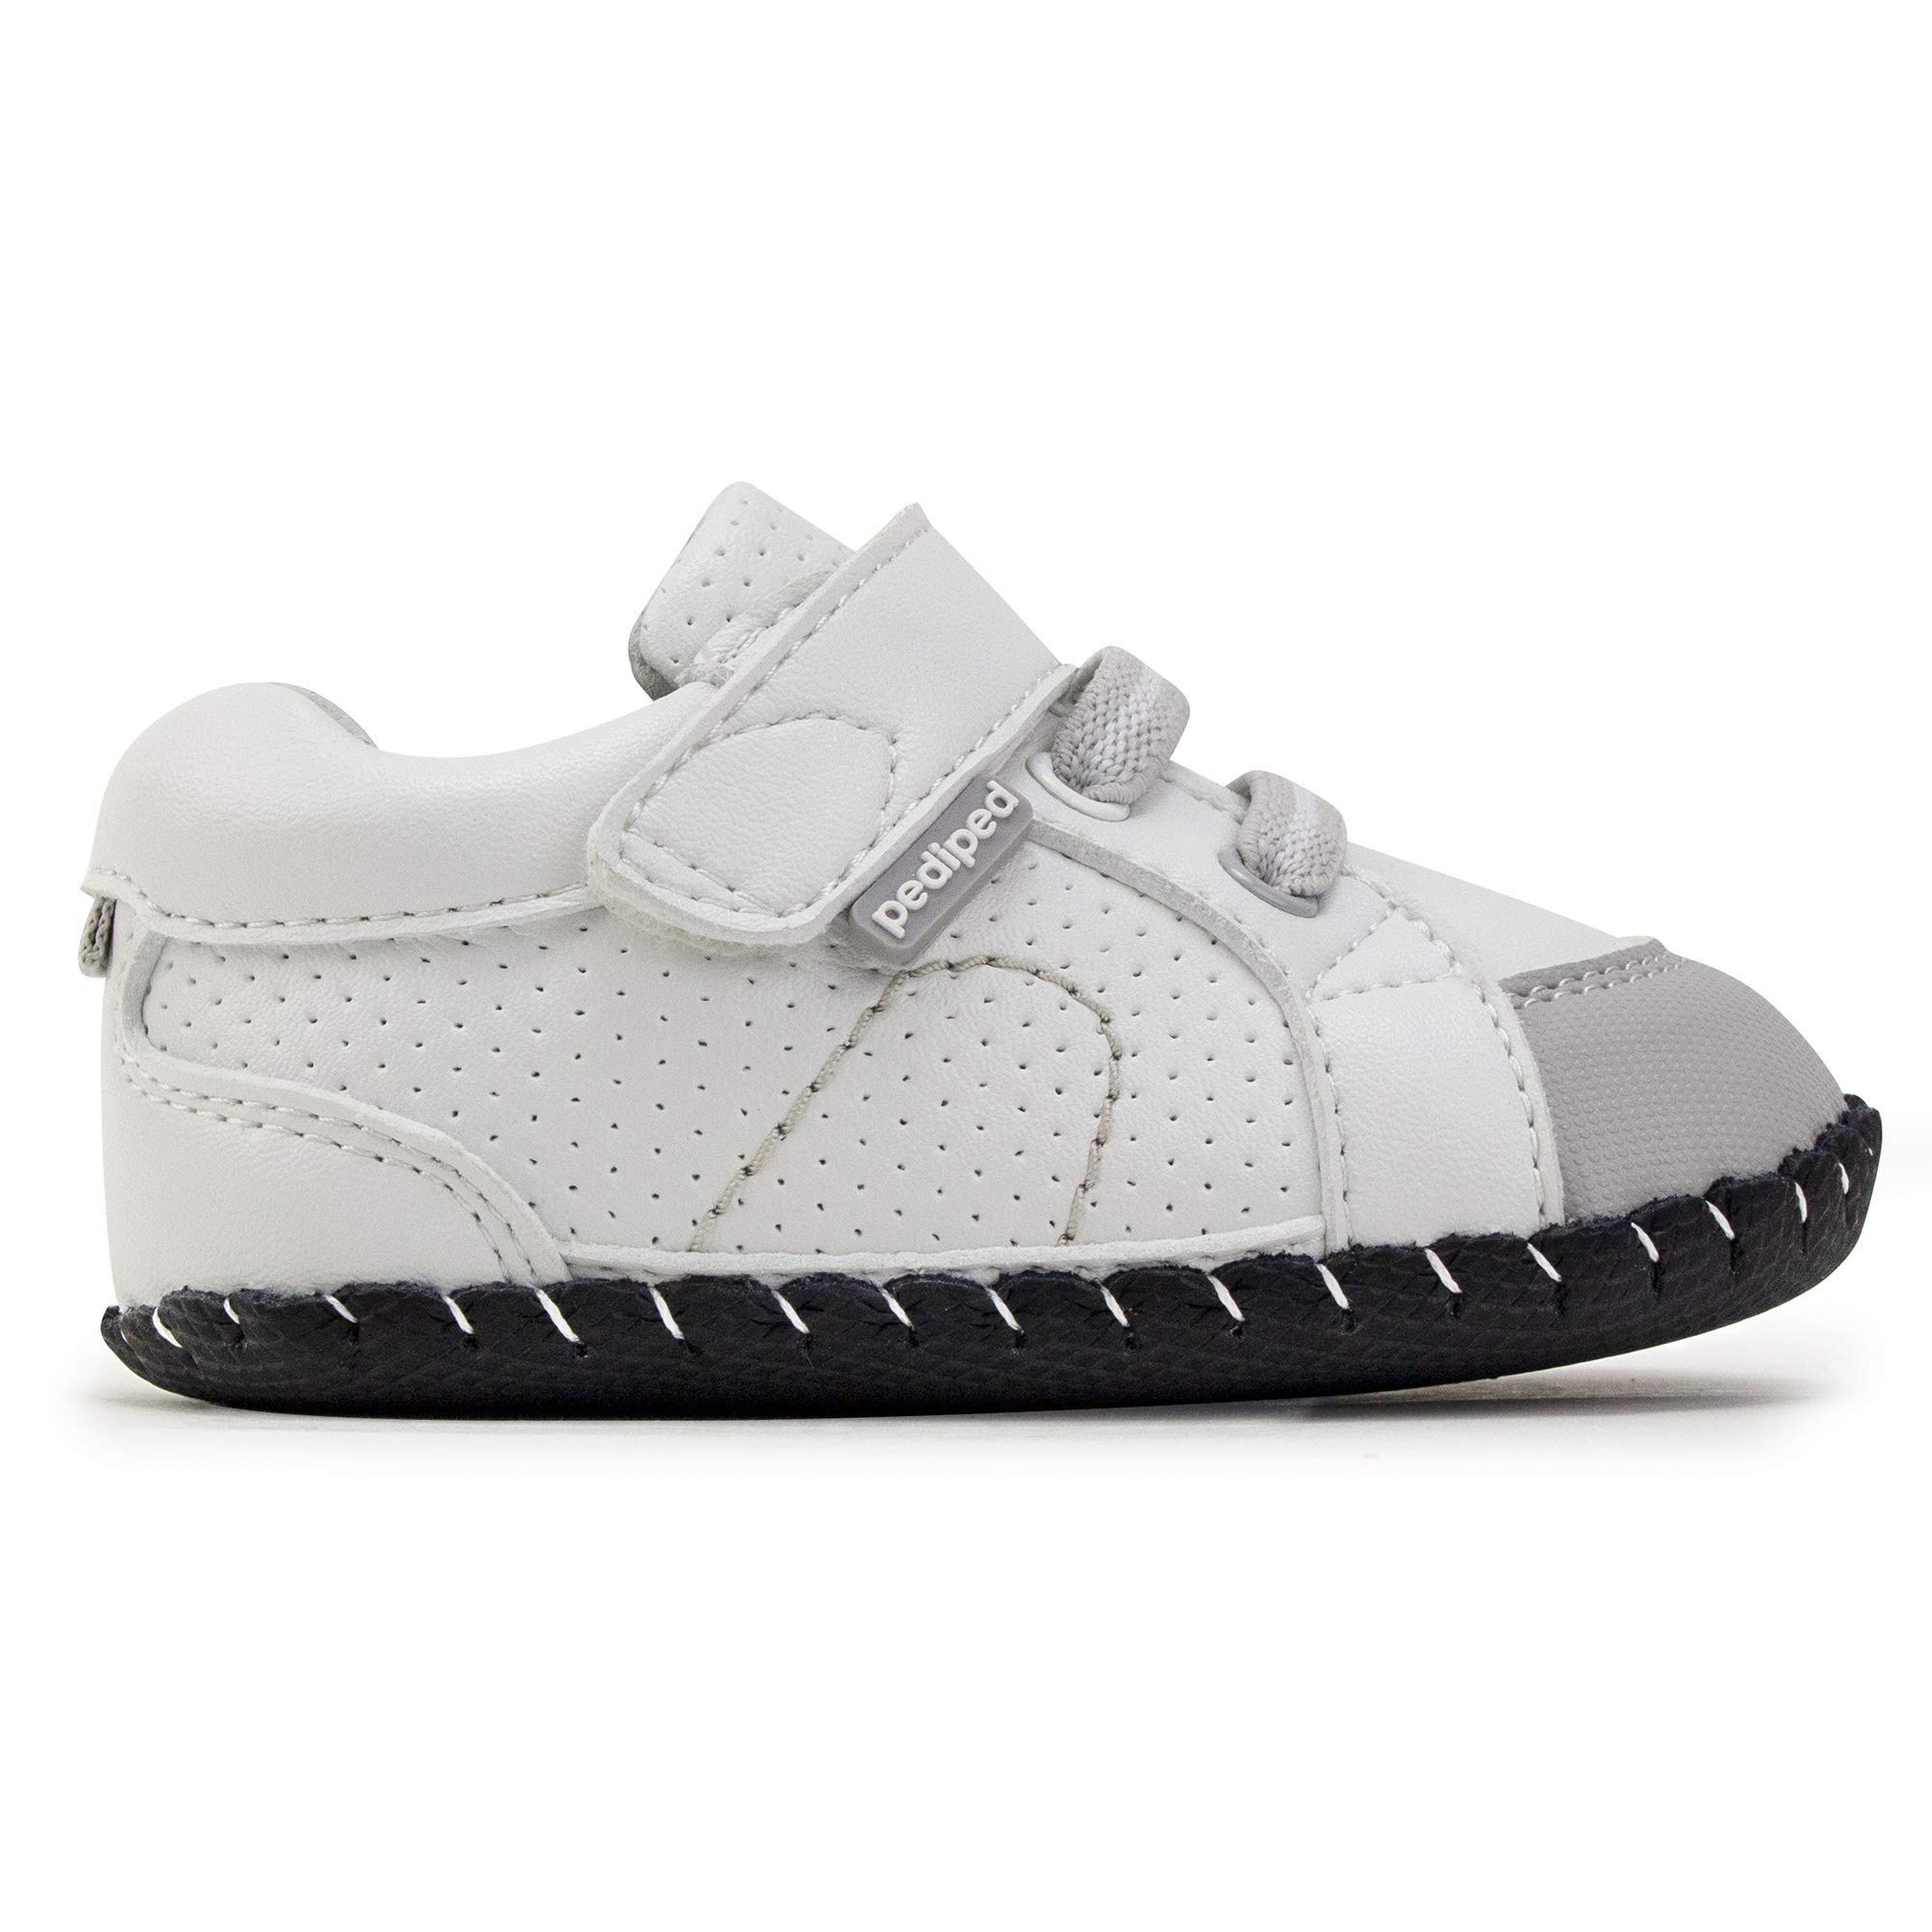 pediped Unisex-Child Sneaker Crib Shoe